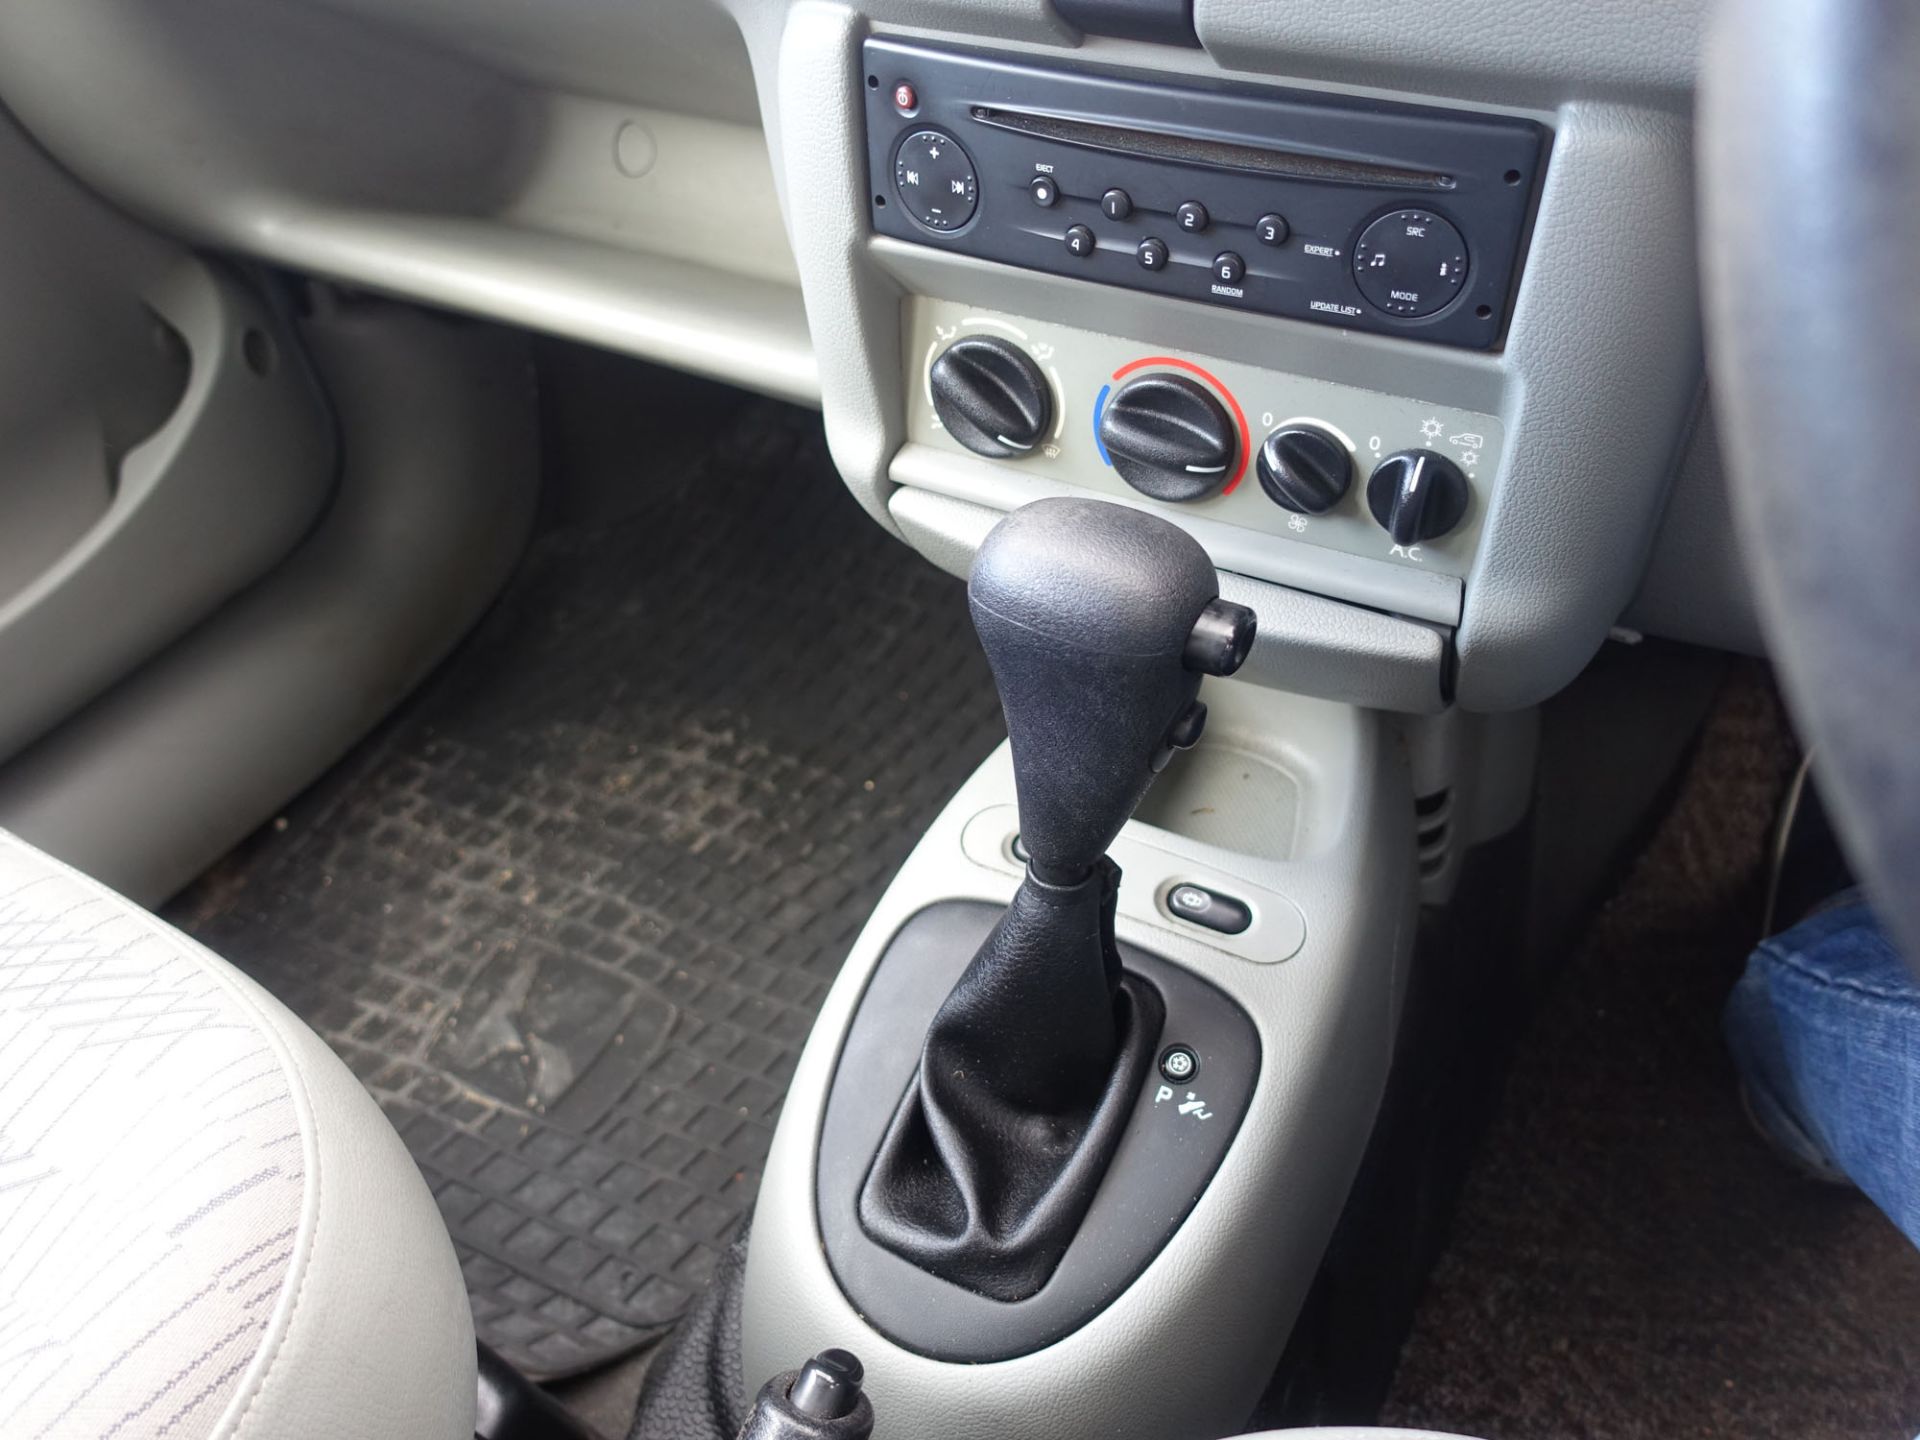 (2006) Renault Kango Expression automatic MPV, petrol, 1598cc, grey, MOT: 8/8/2021, two keys, V5 - Image 9 of 14